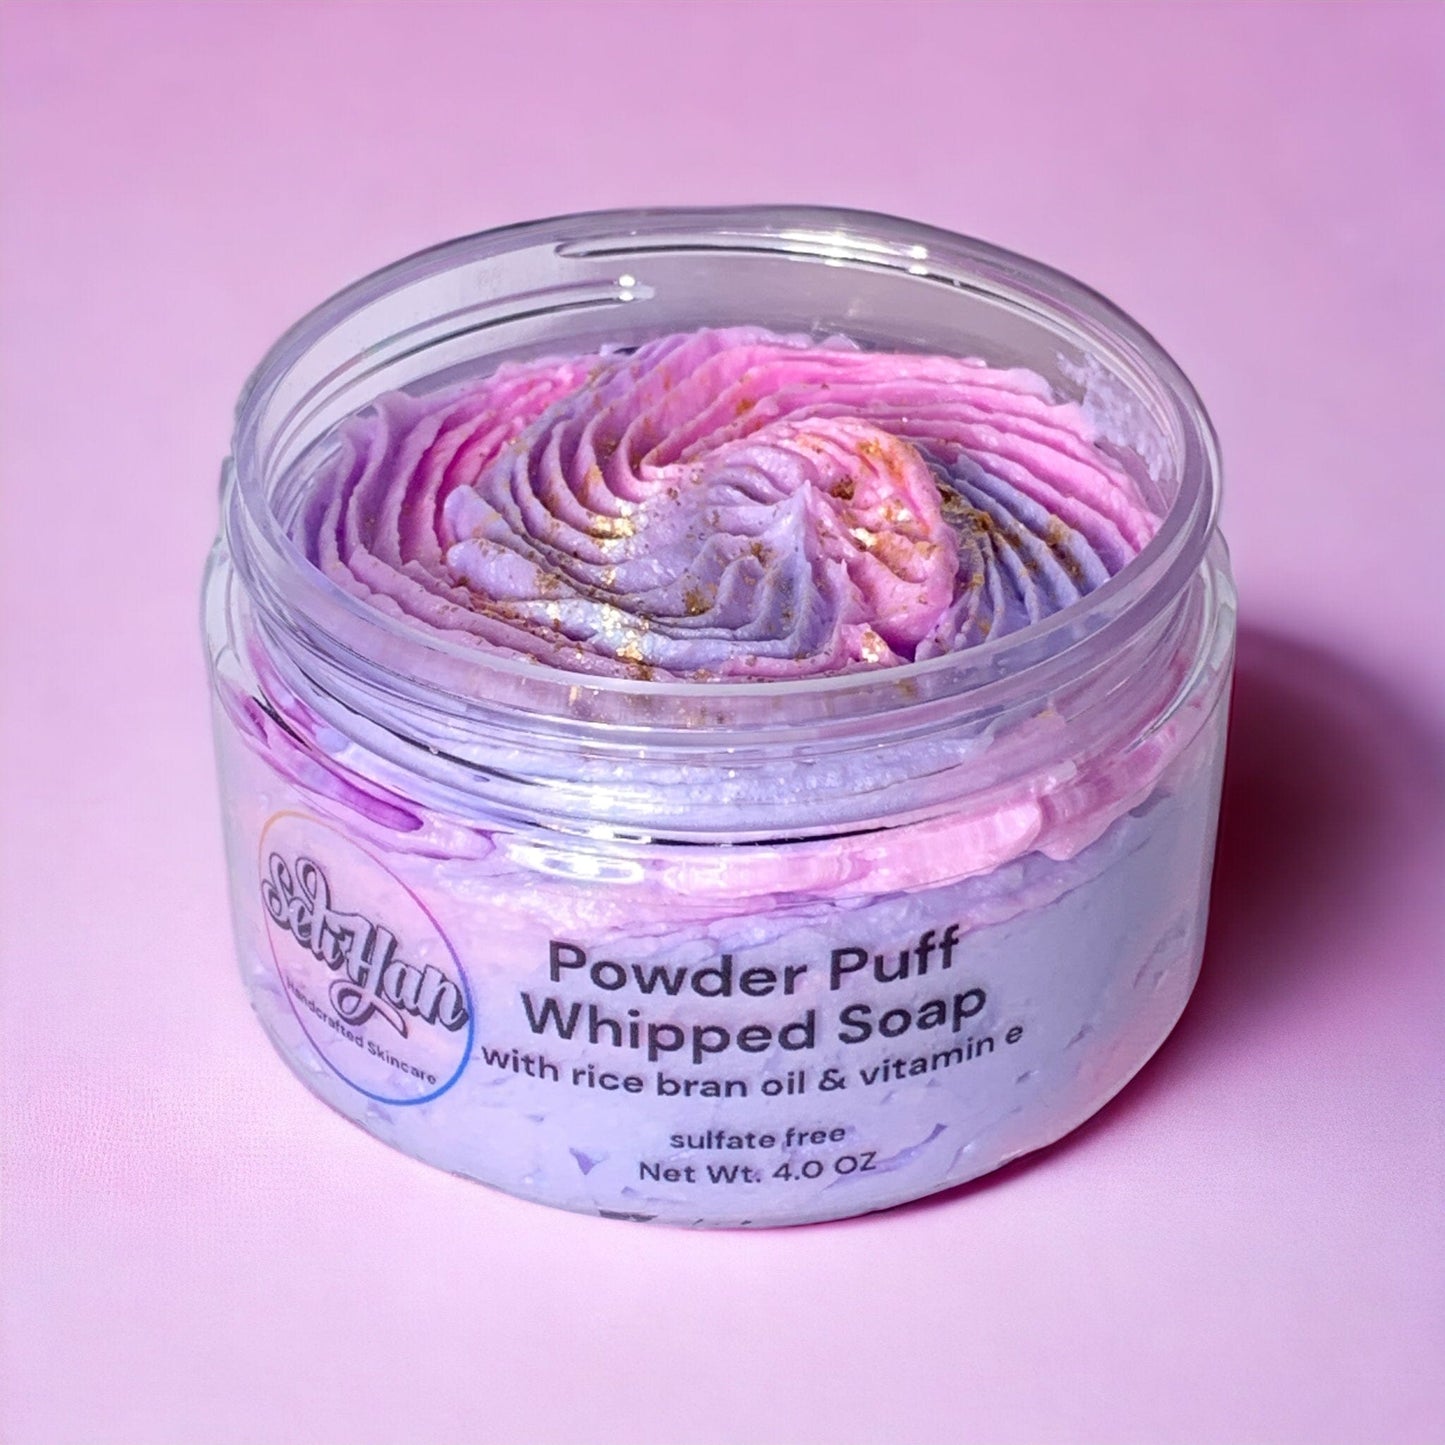 Powder Puff Whipped Soap - Seli Han Skincare 